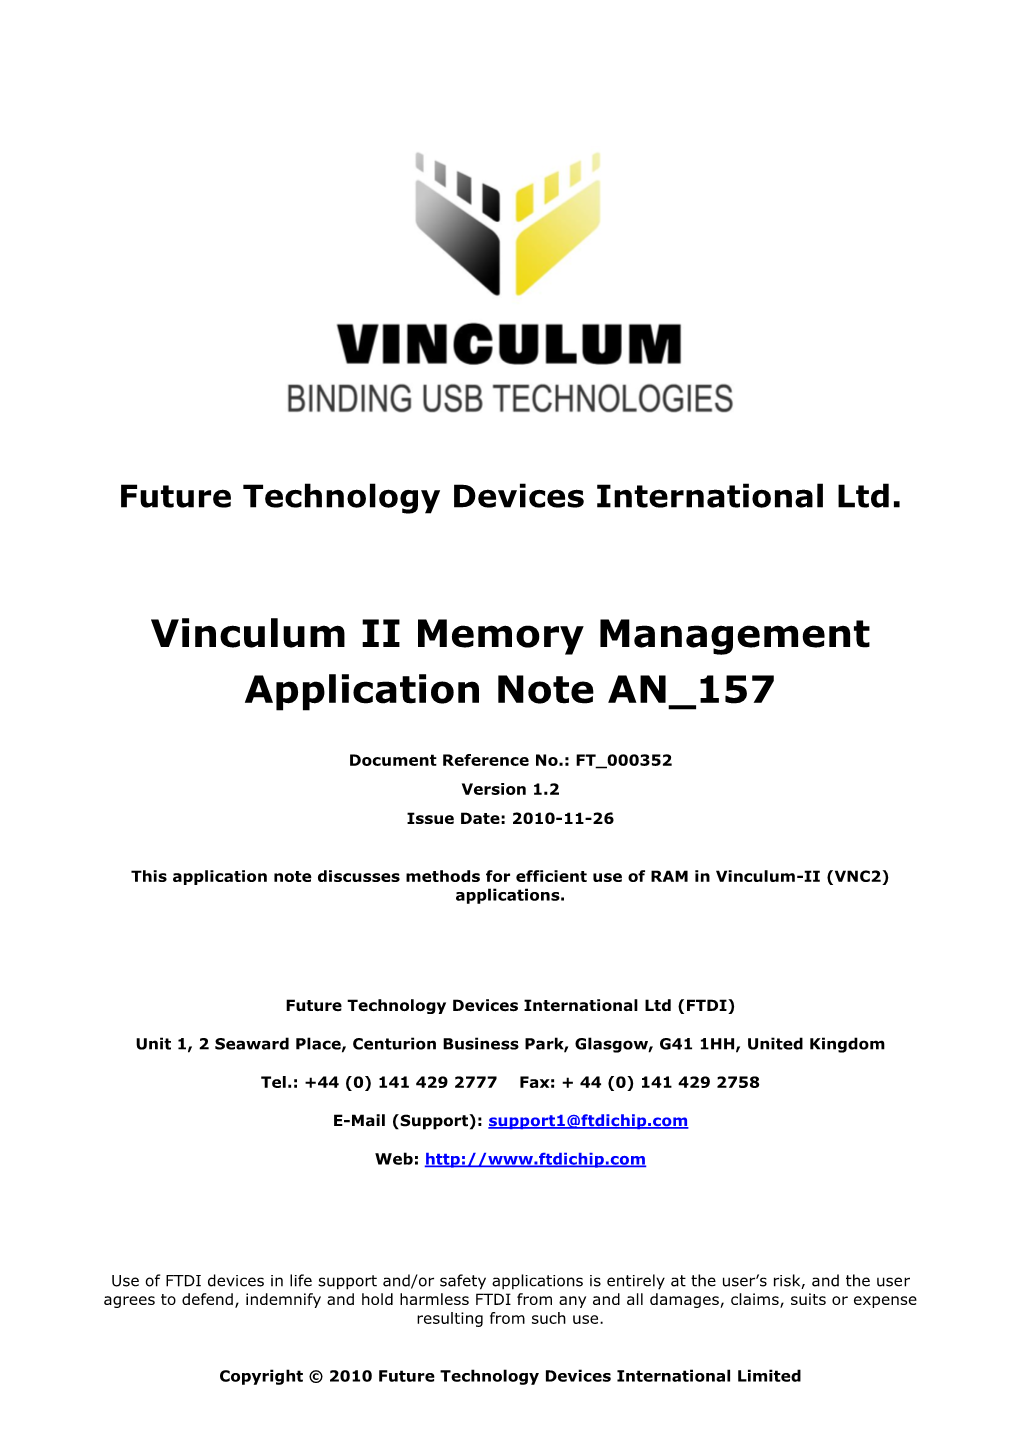 Vinculum II Memory Management Application Note an 157